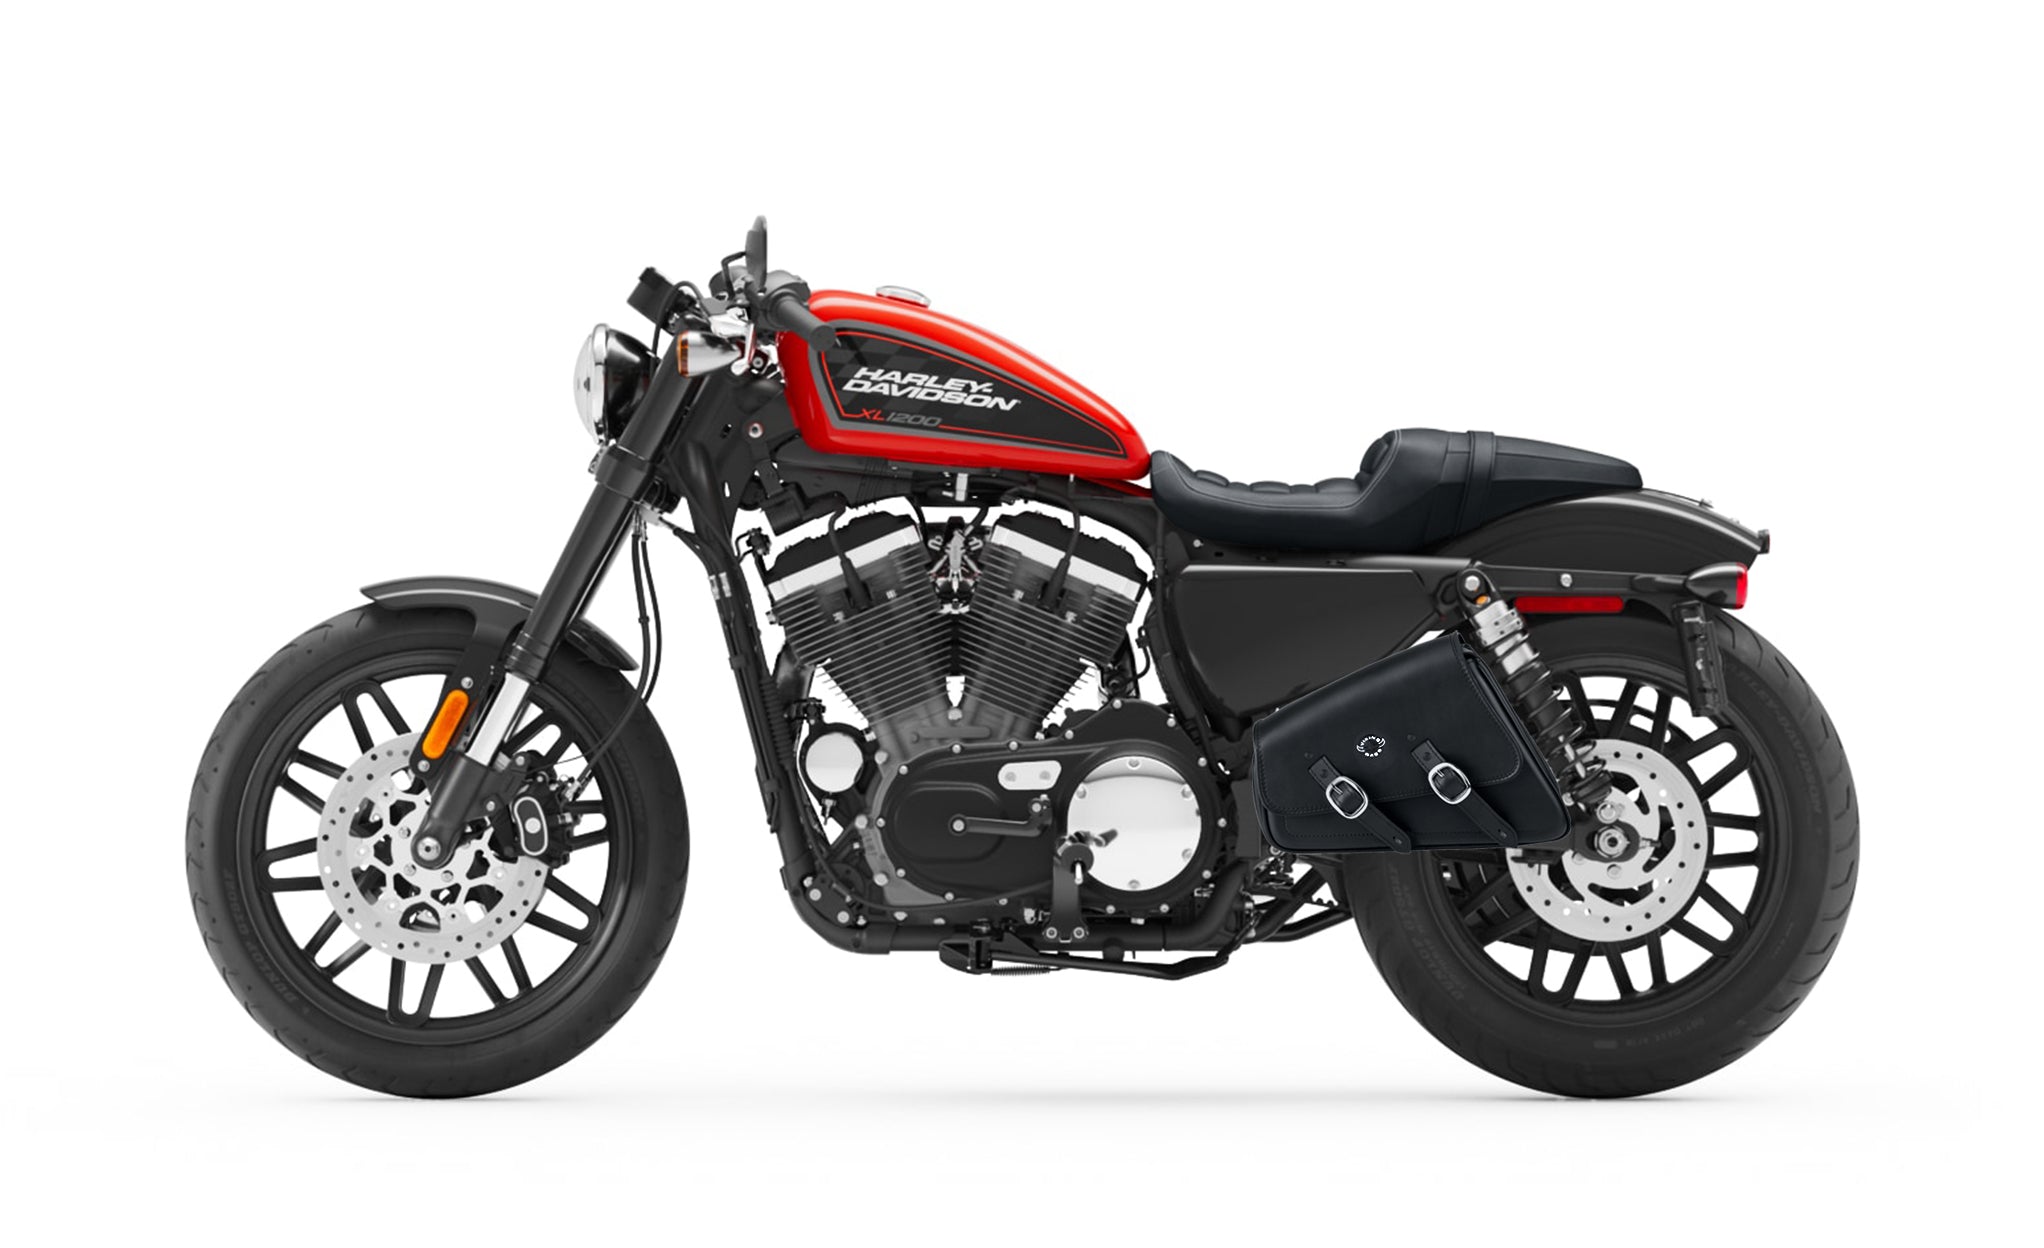 Viking Bullet Motorcycle Swing Arm Bag for Harley Sportster 1200 Custom XL1200C/XLH1200C Bag on Bike View @expand